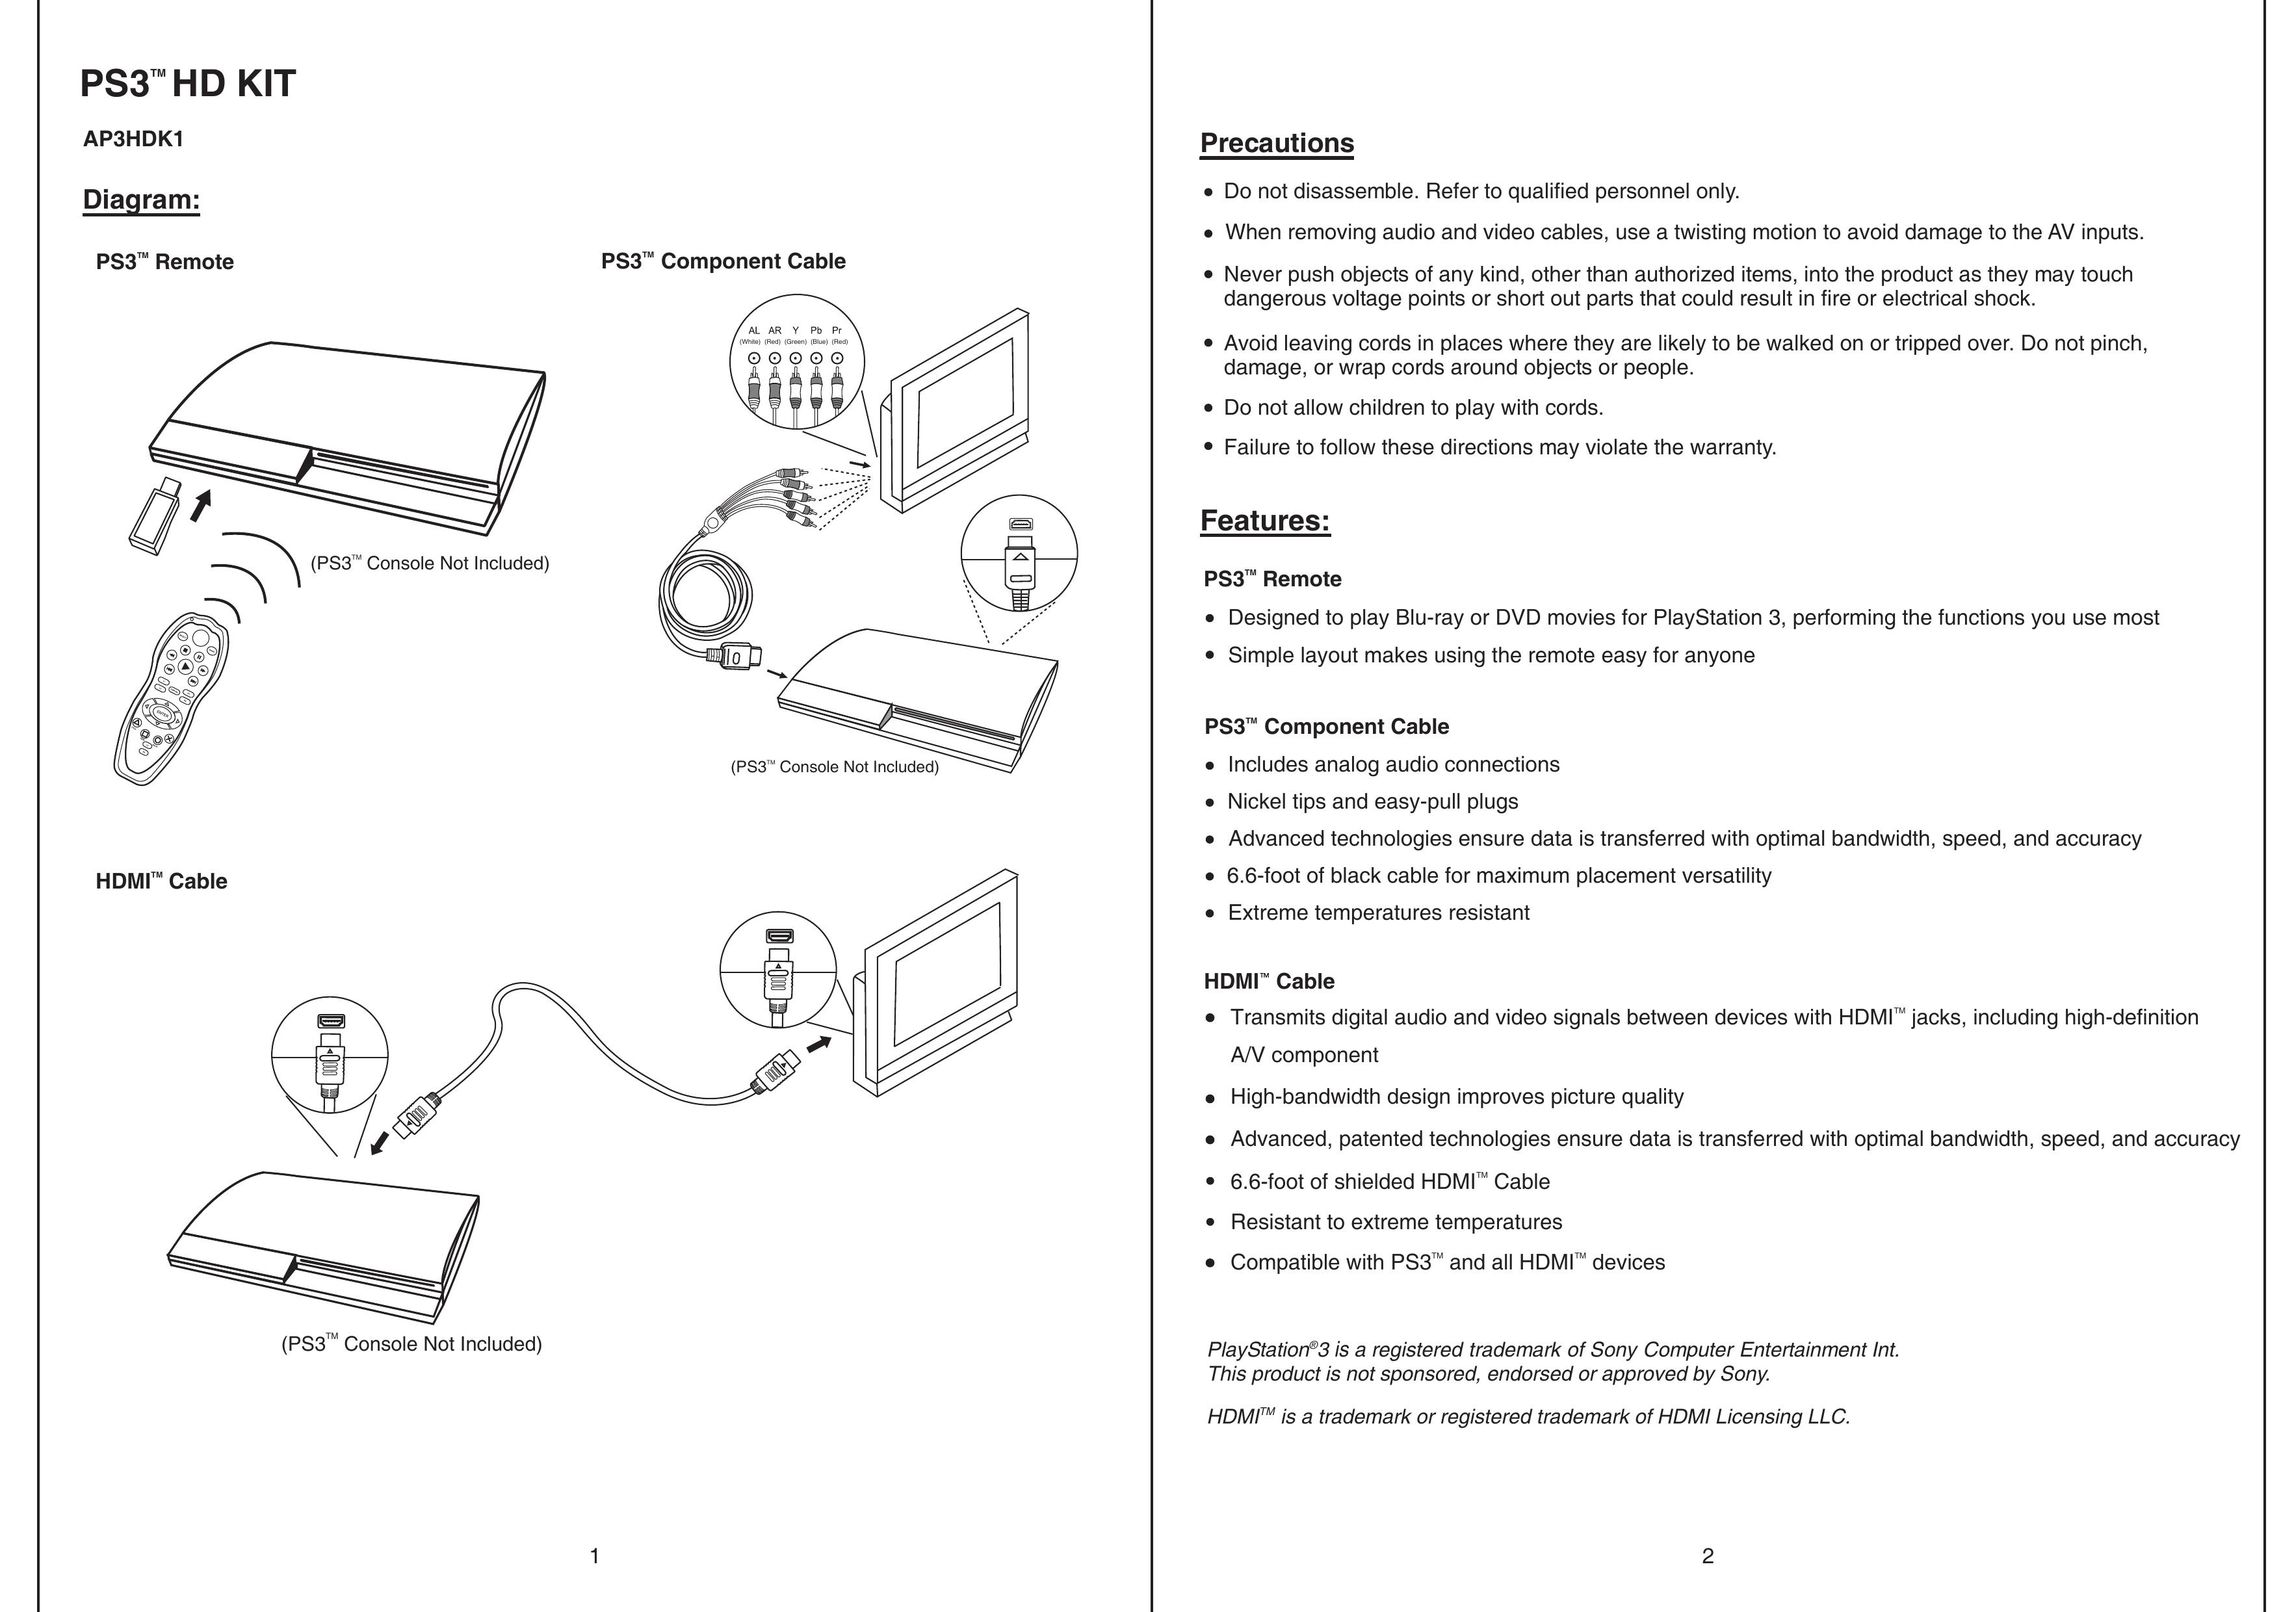 Sony AP3HDK1 Video Game Console User Manual